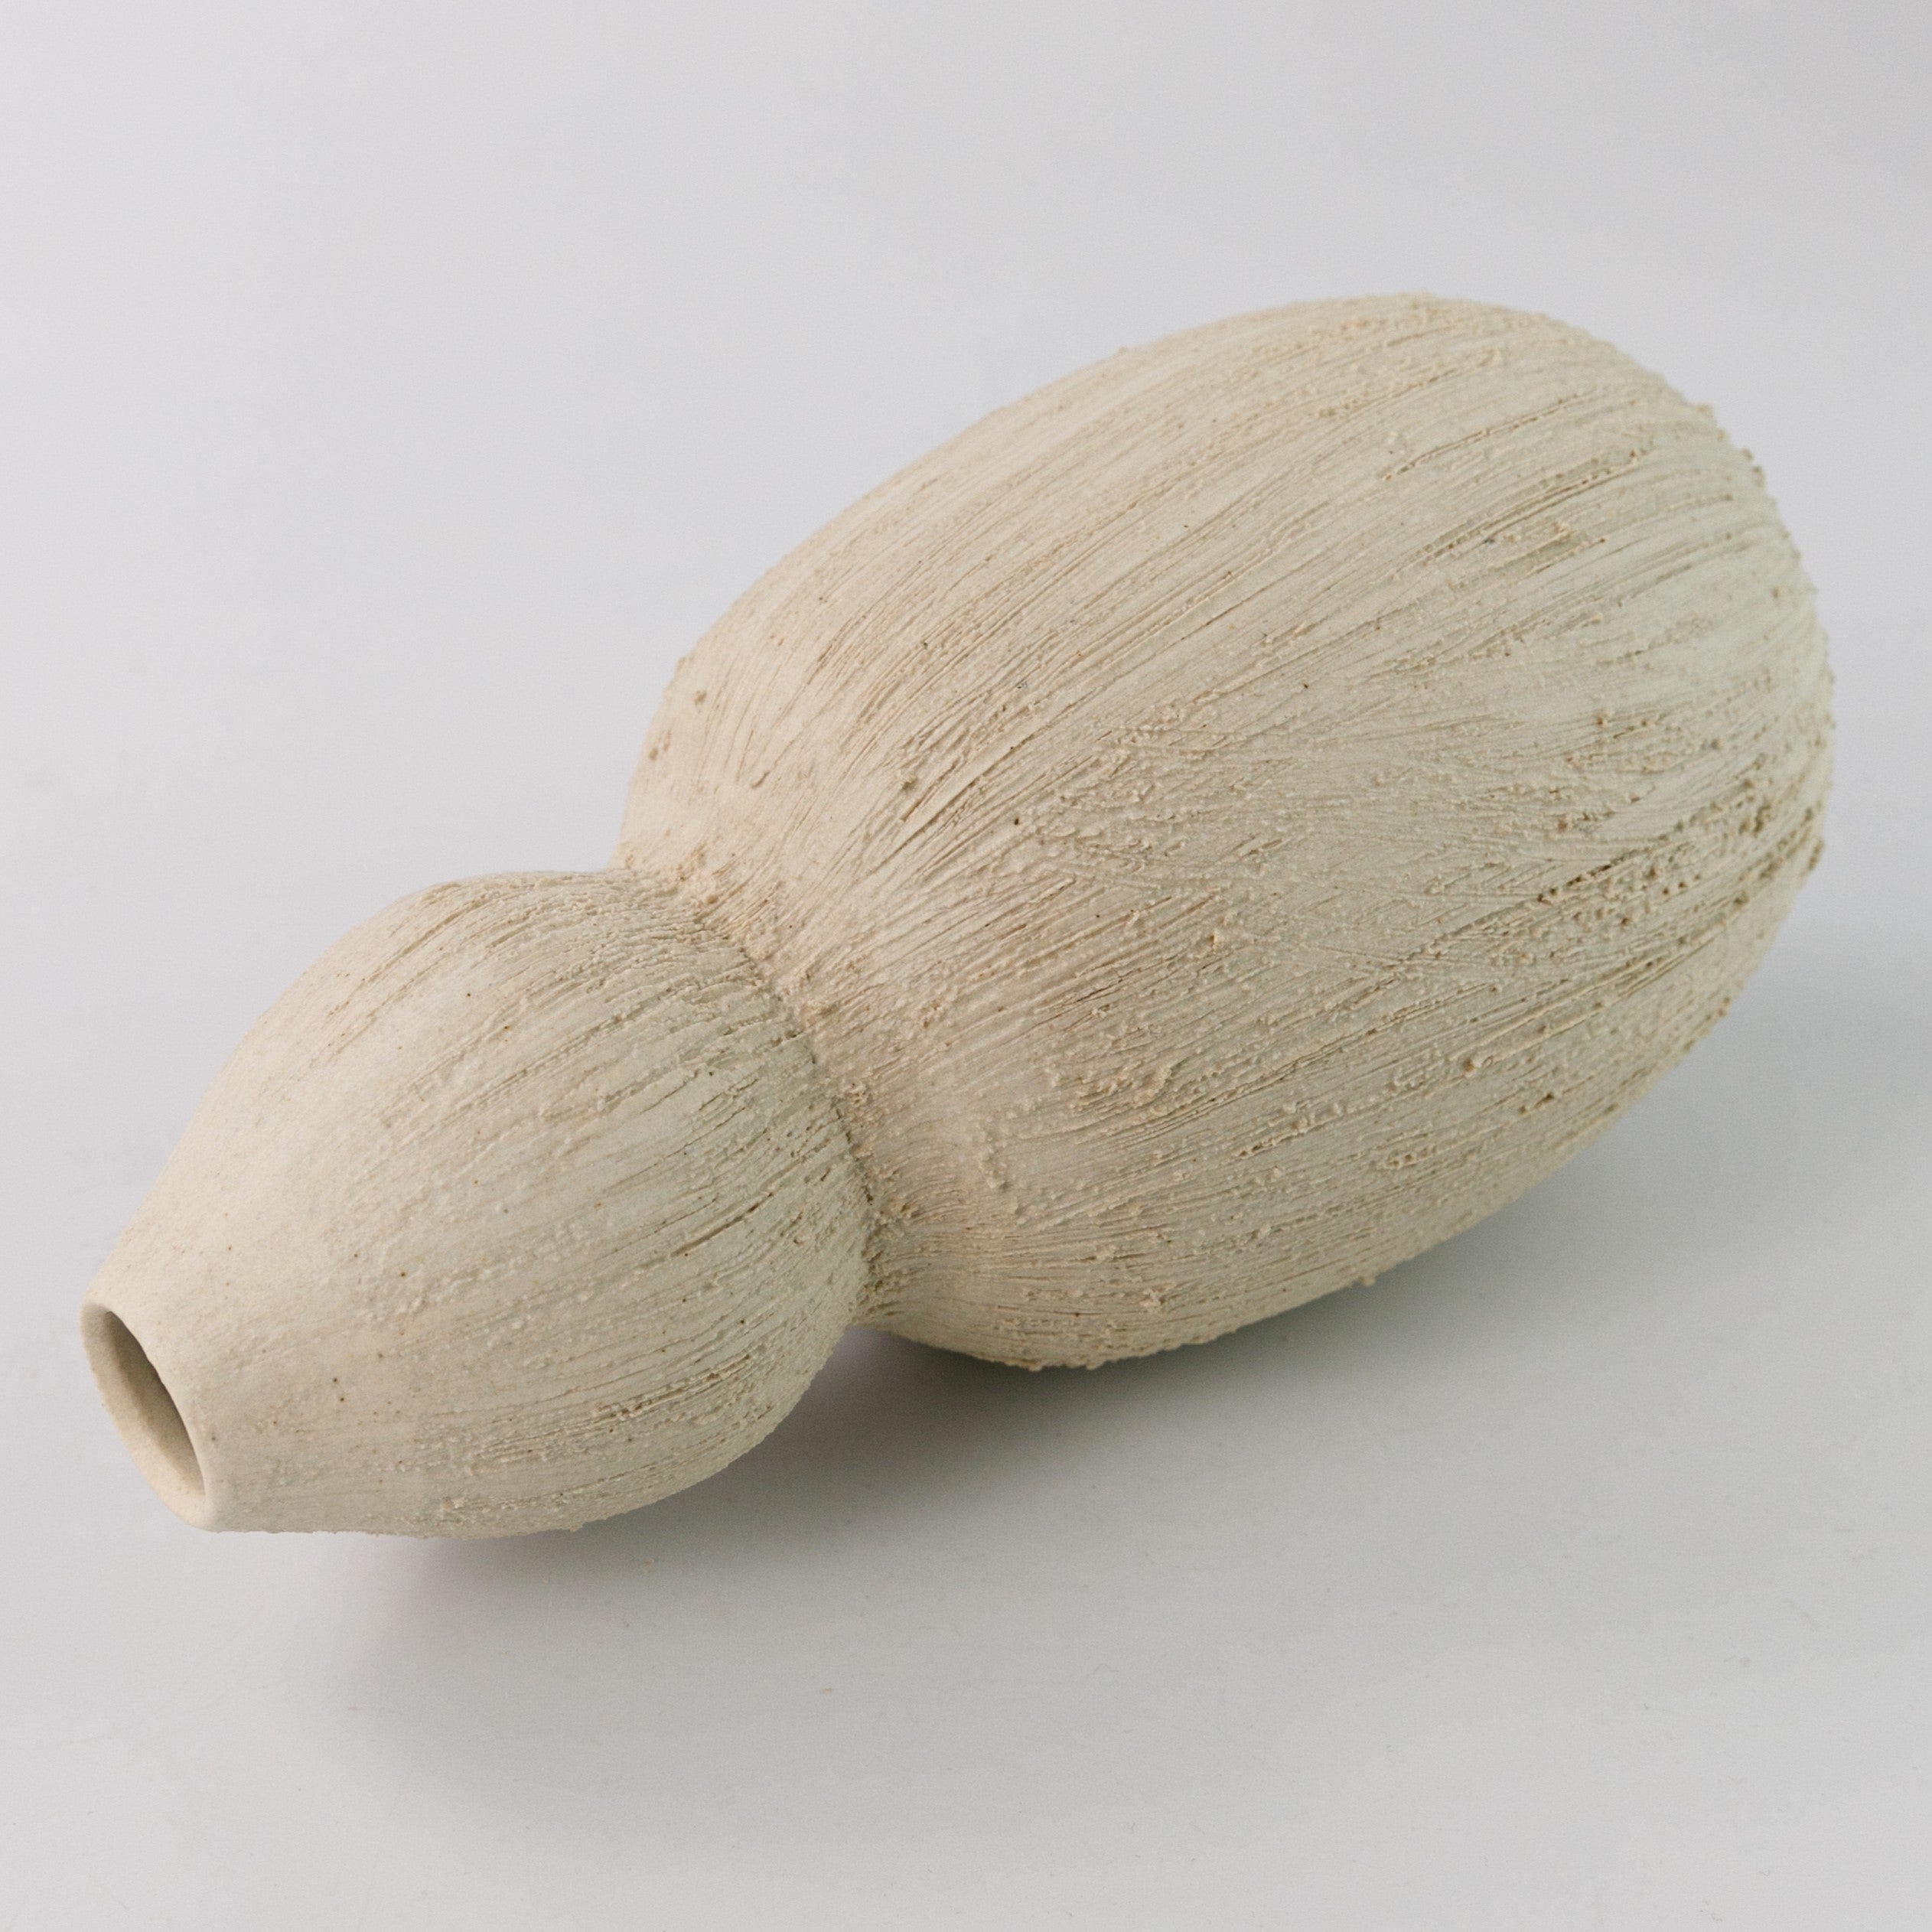 Coconut Vase